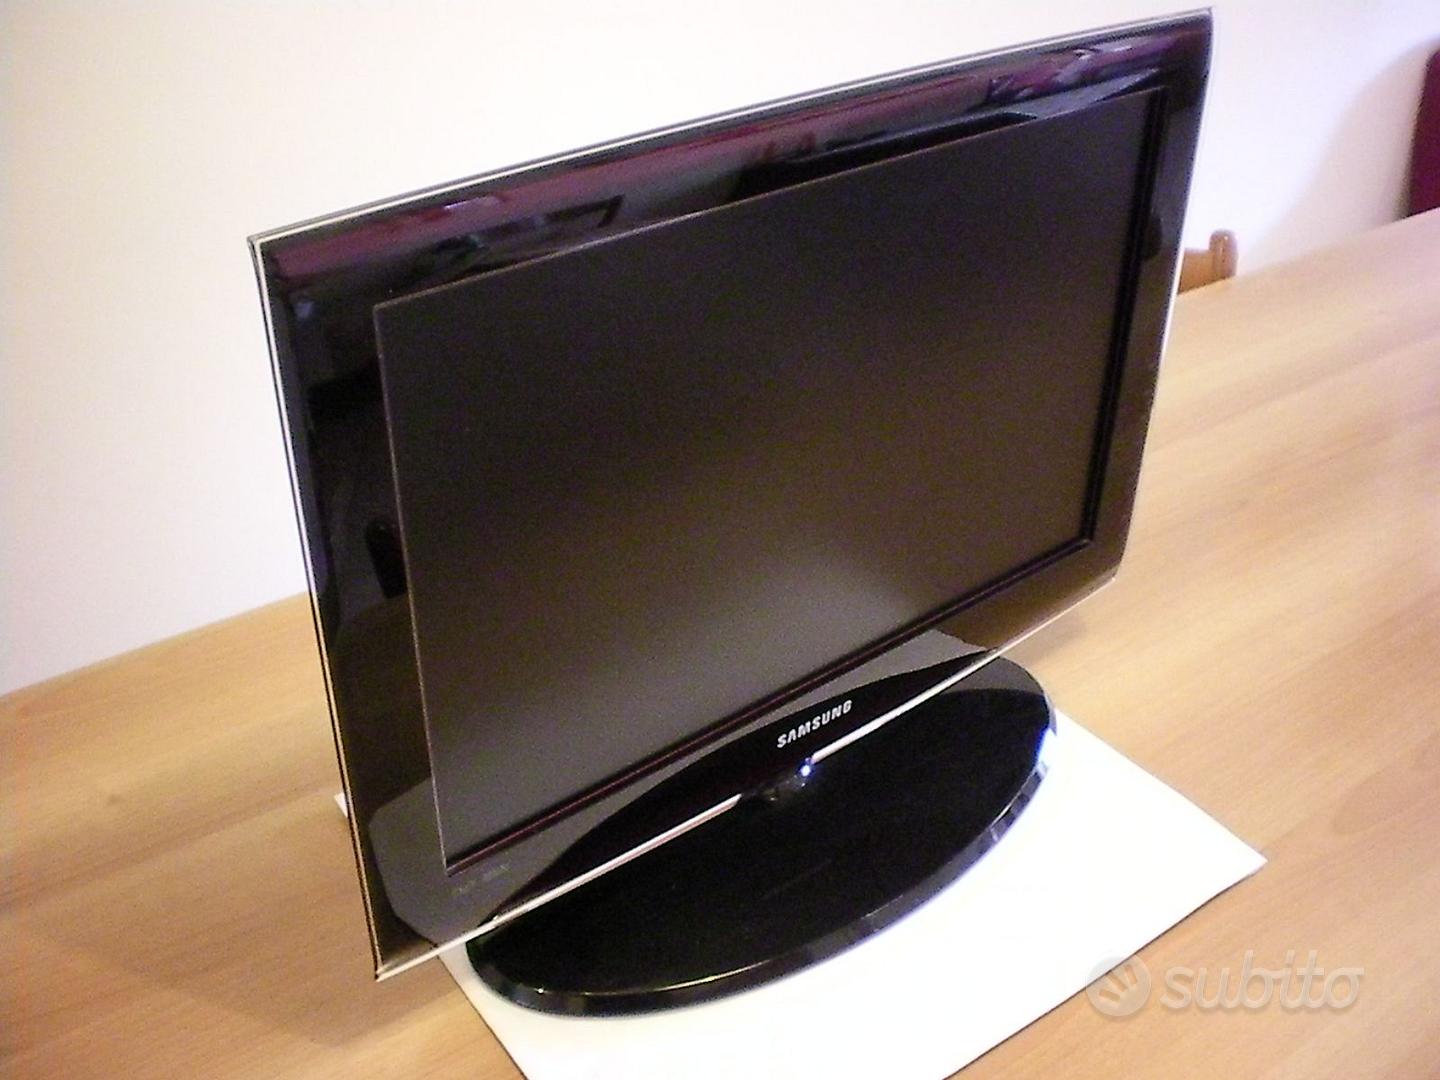 Samsung Monitor TV 22 pollici con decoder - Audio/Video In vendita a Torino